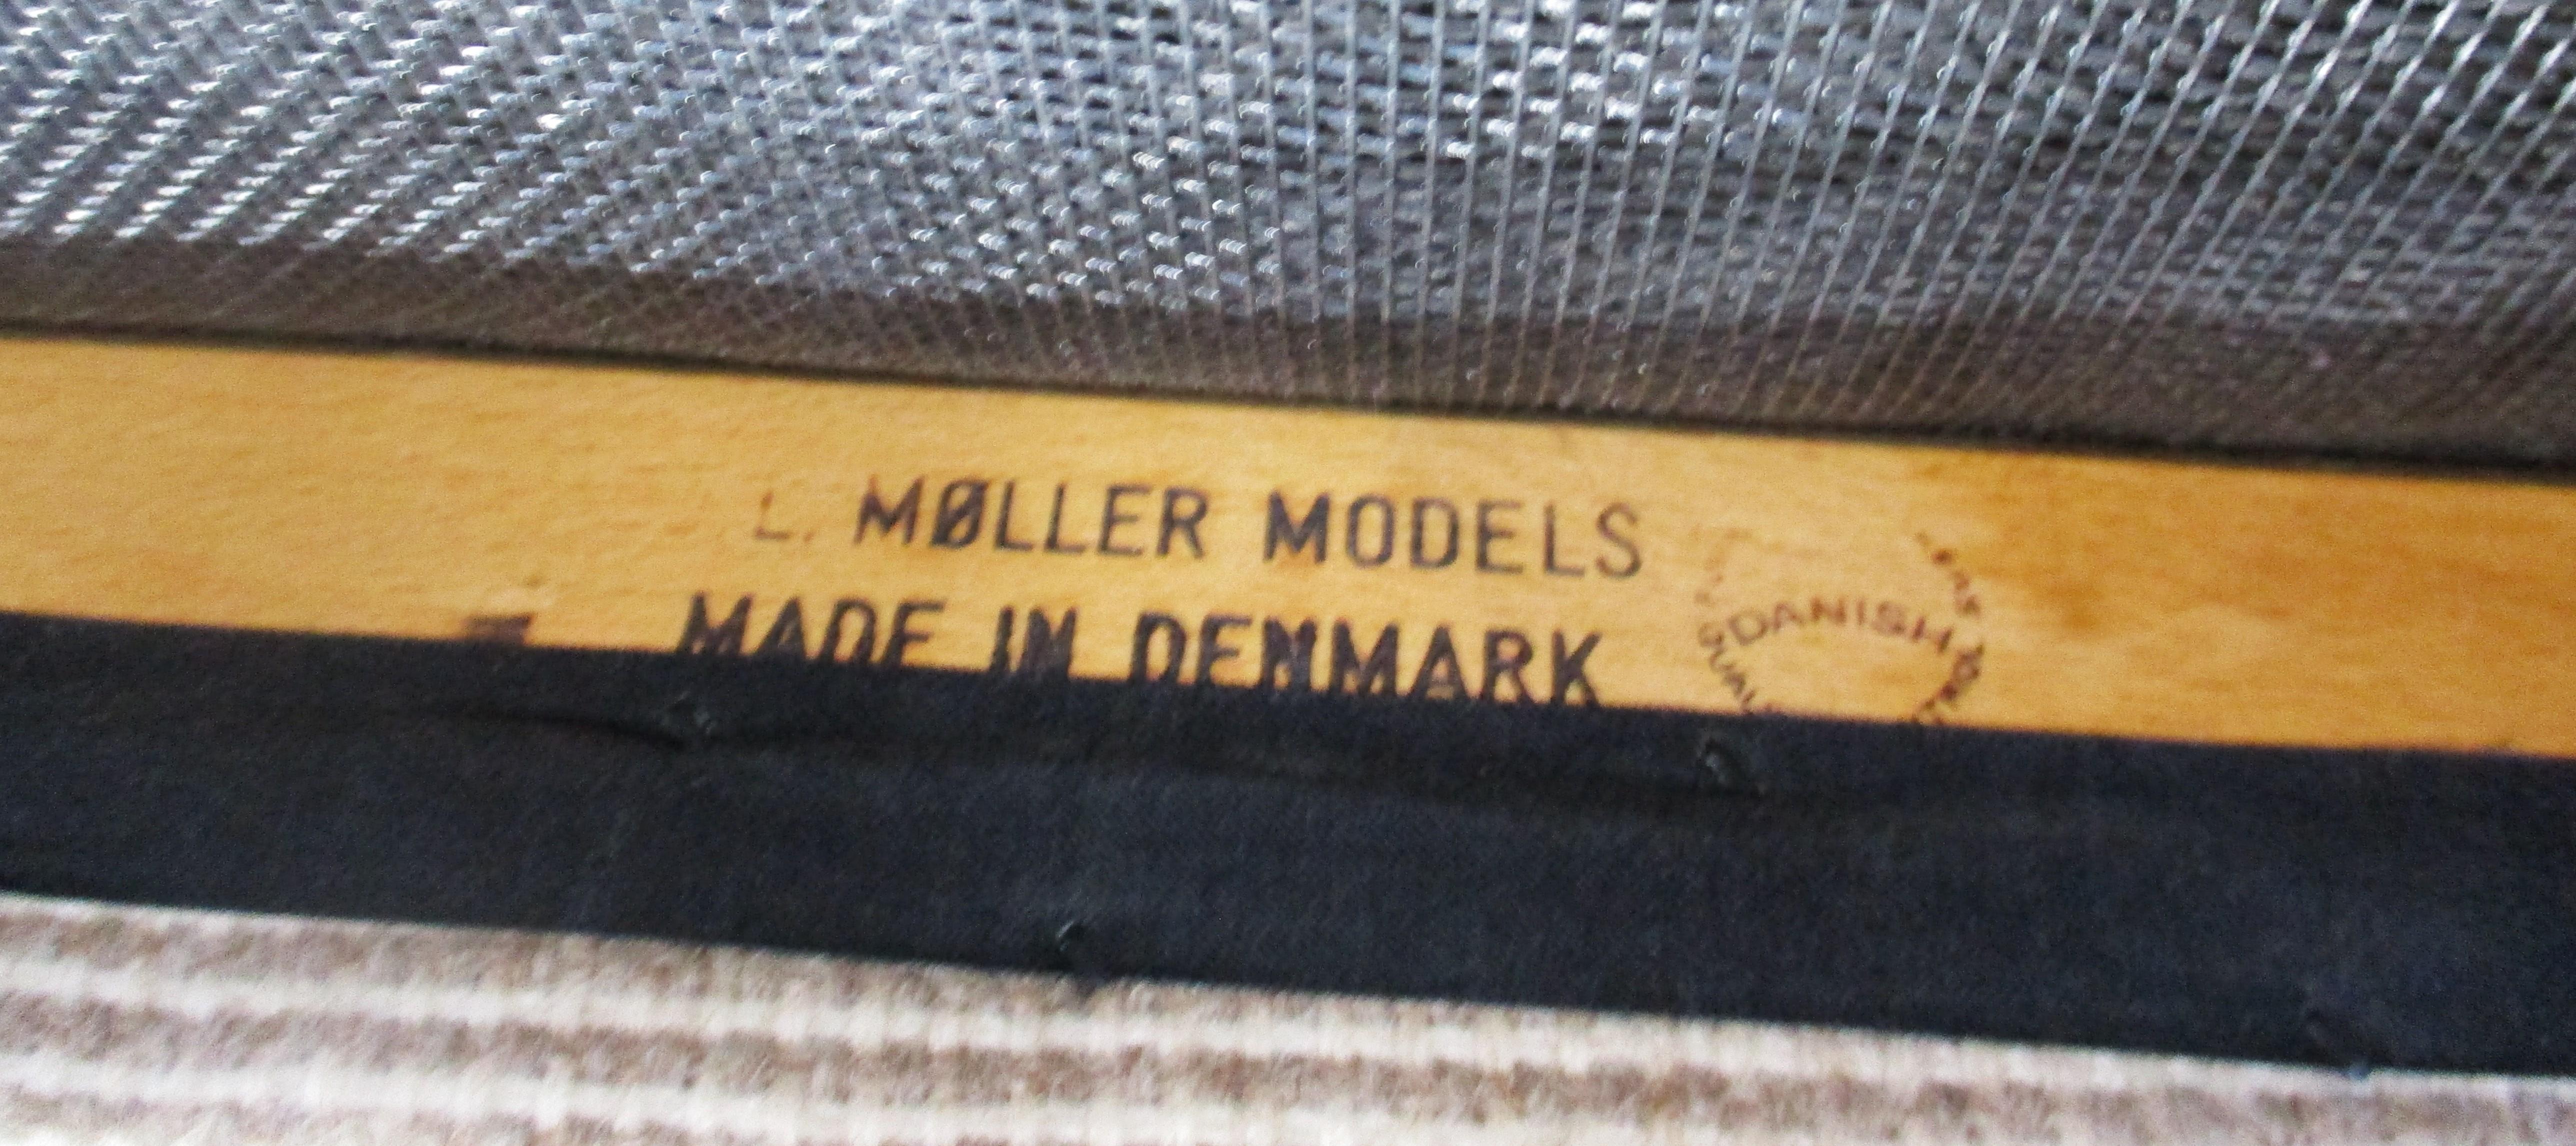 Niels Moller Teak Upholstered Dining Chairs by J L Moller Denmark  For Sale 8